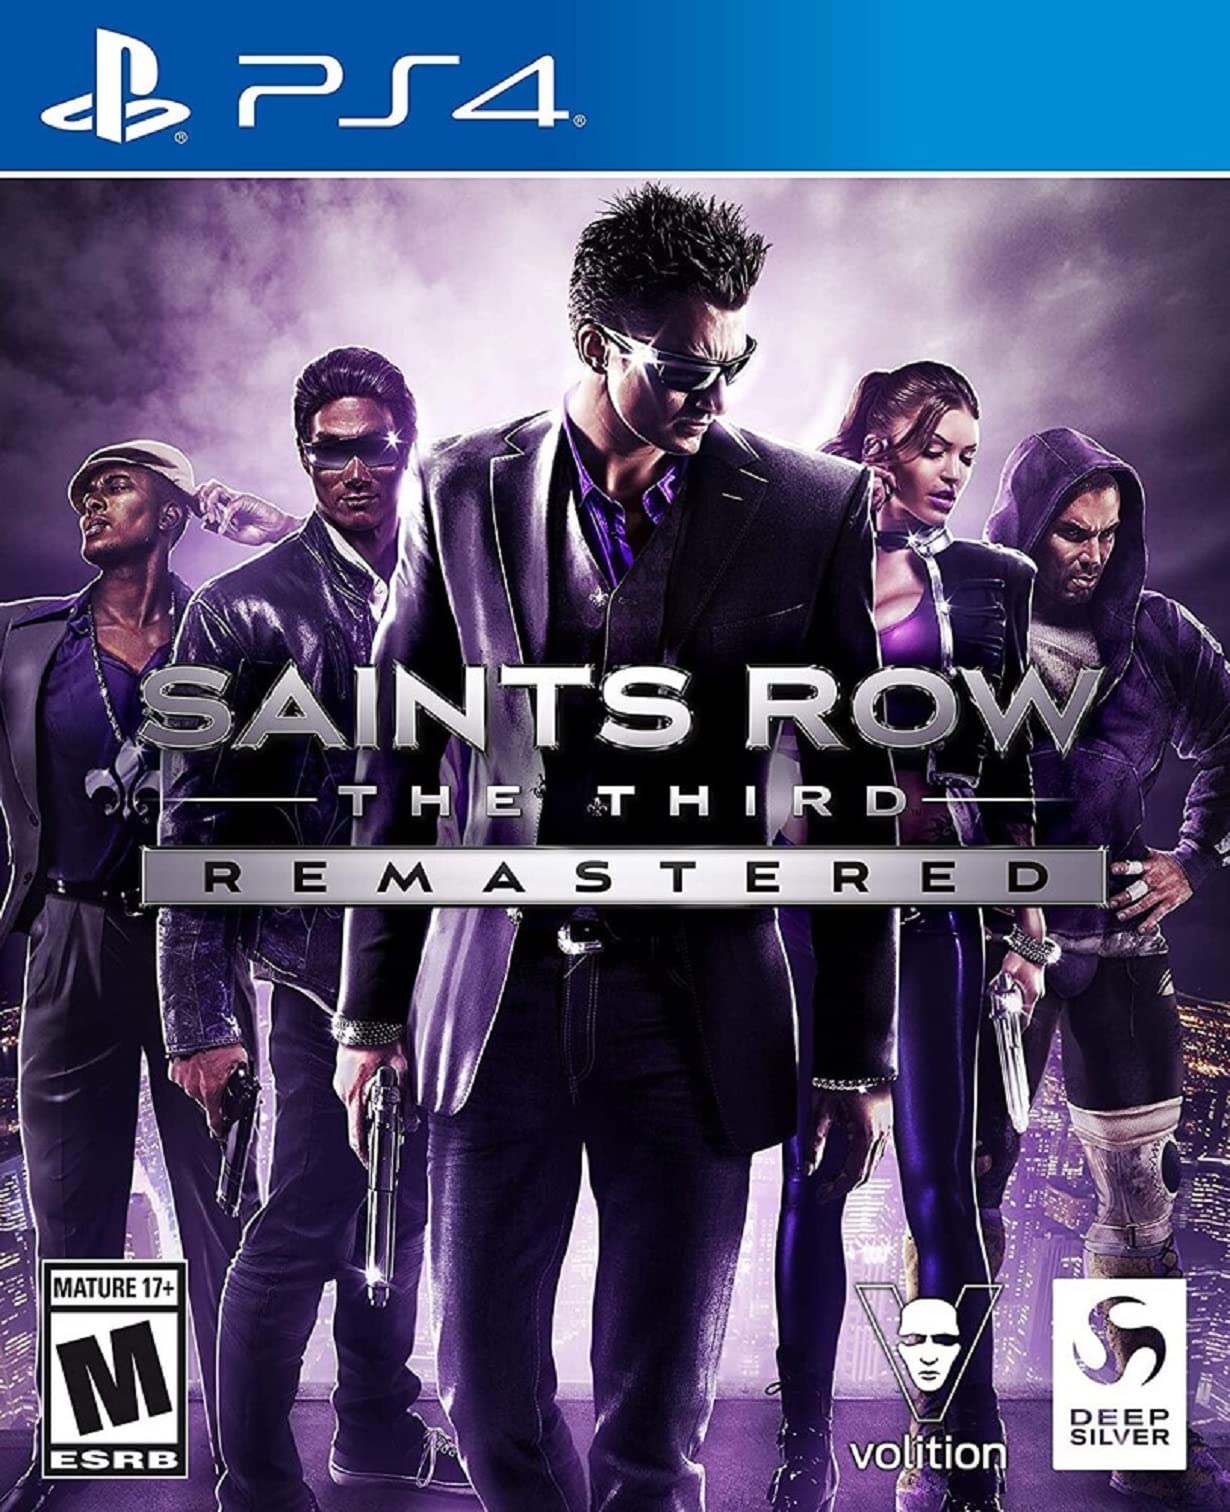 saints row the third - jogo playstation 3 - mundo aberto - Retro Games